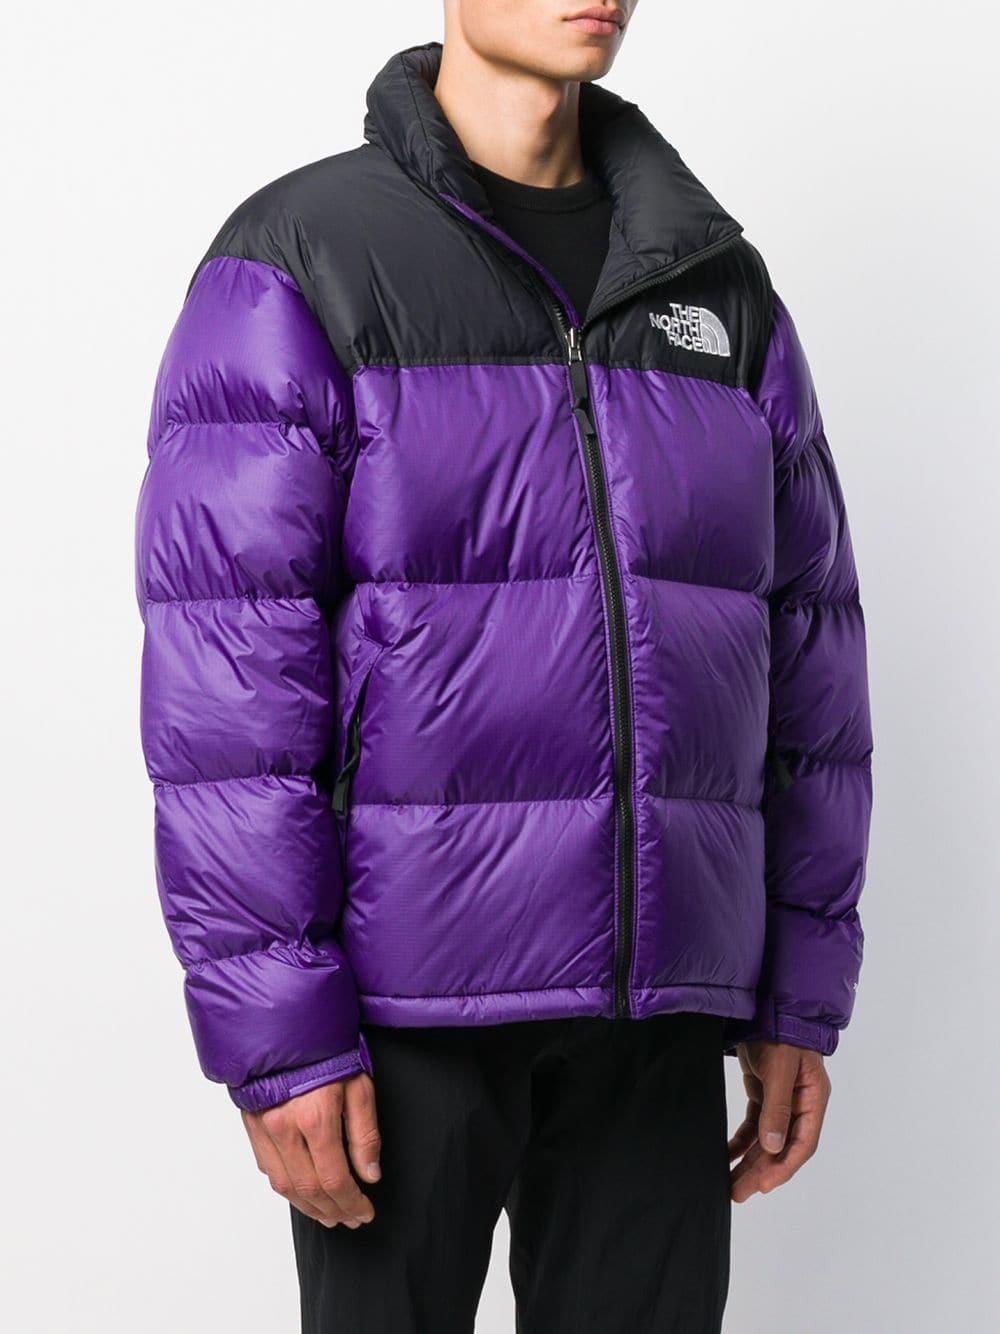 north face mens purple jacket